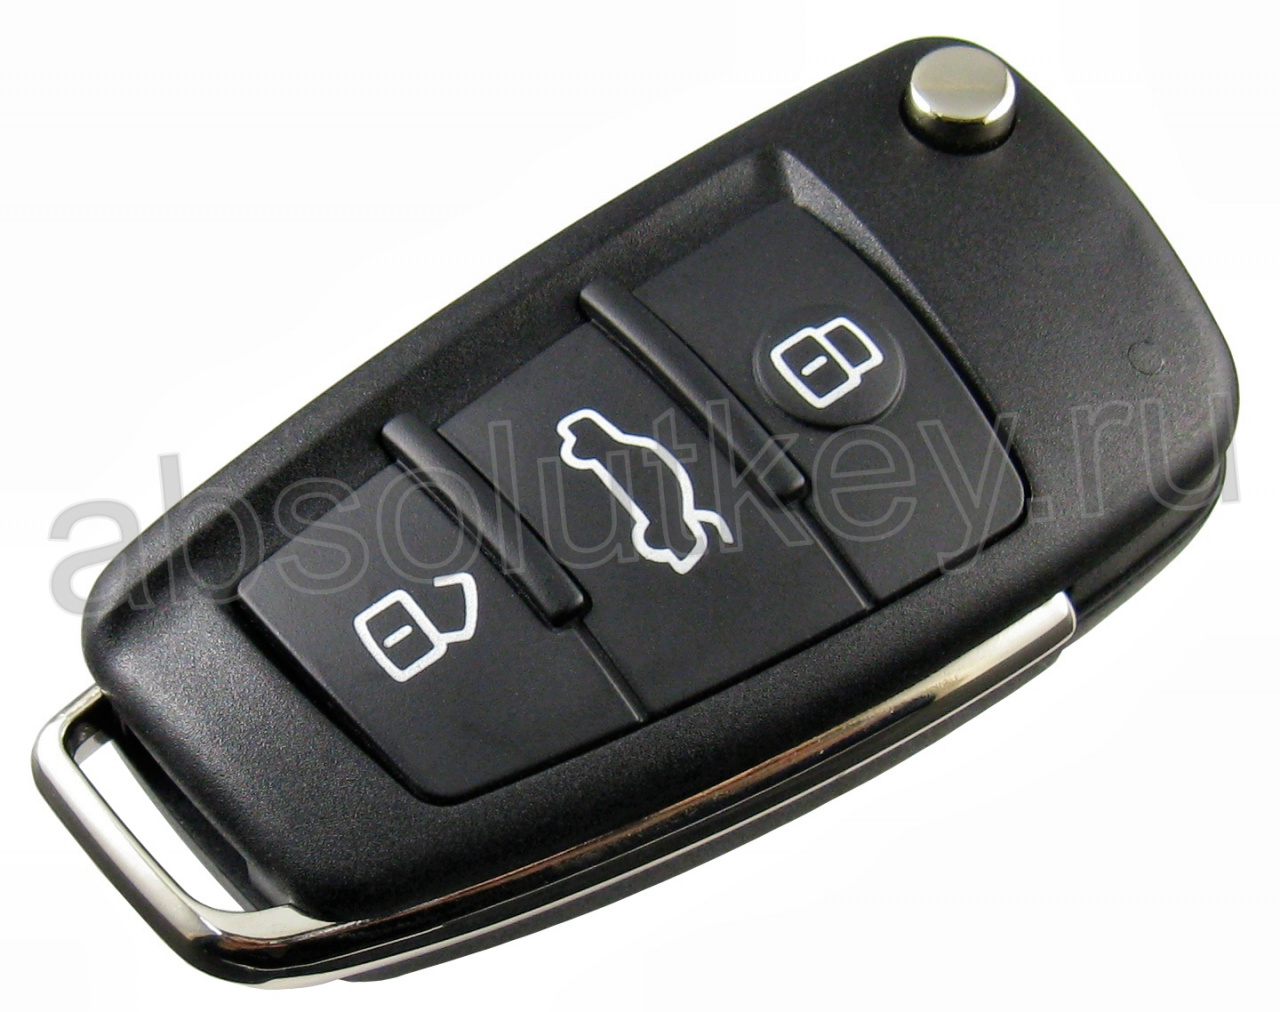 Ключ для AUDI A2,А4/RS4, 2004-2008, 433 Mгц.